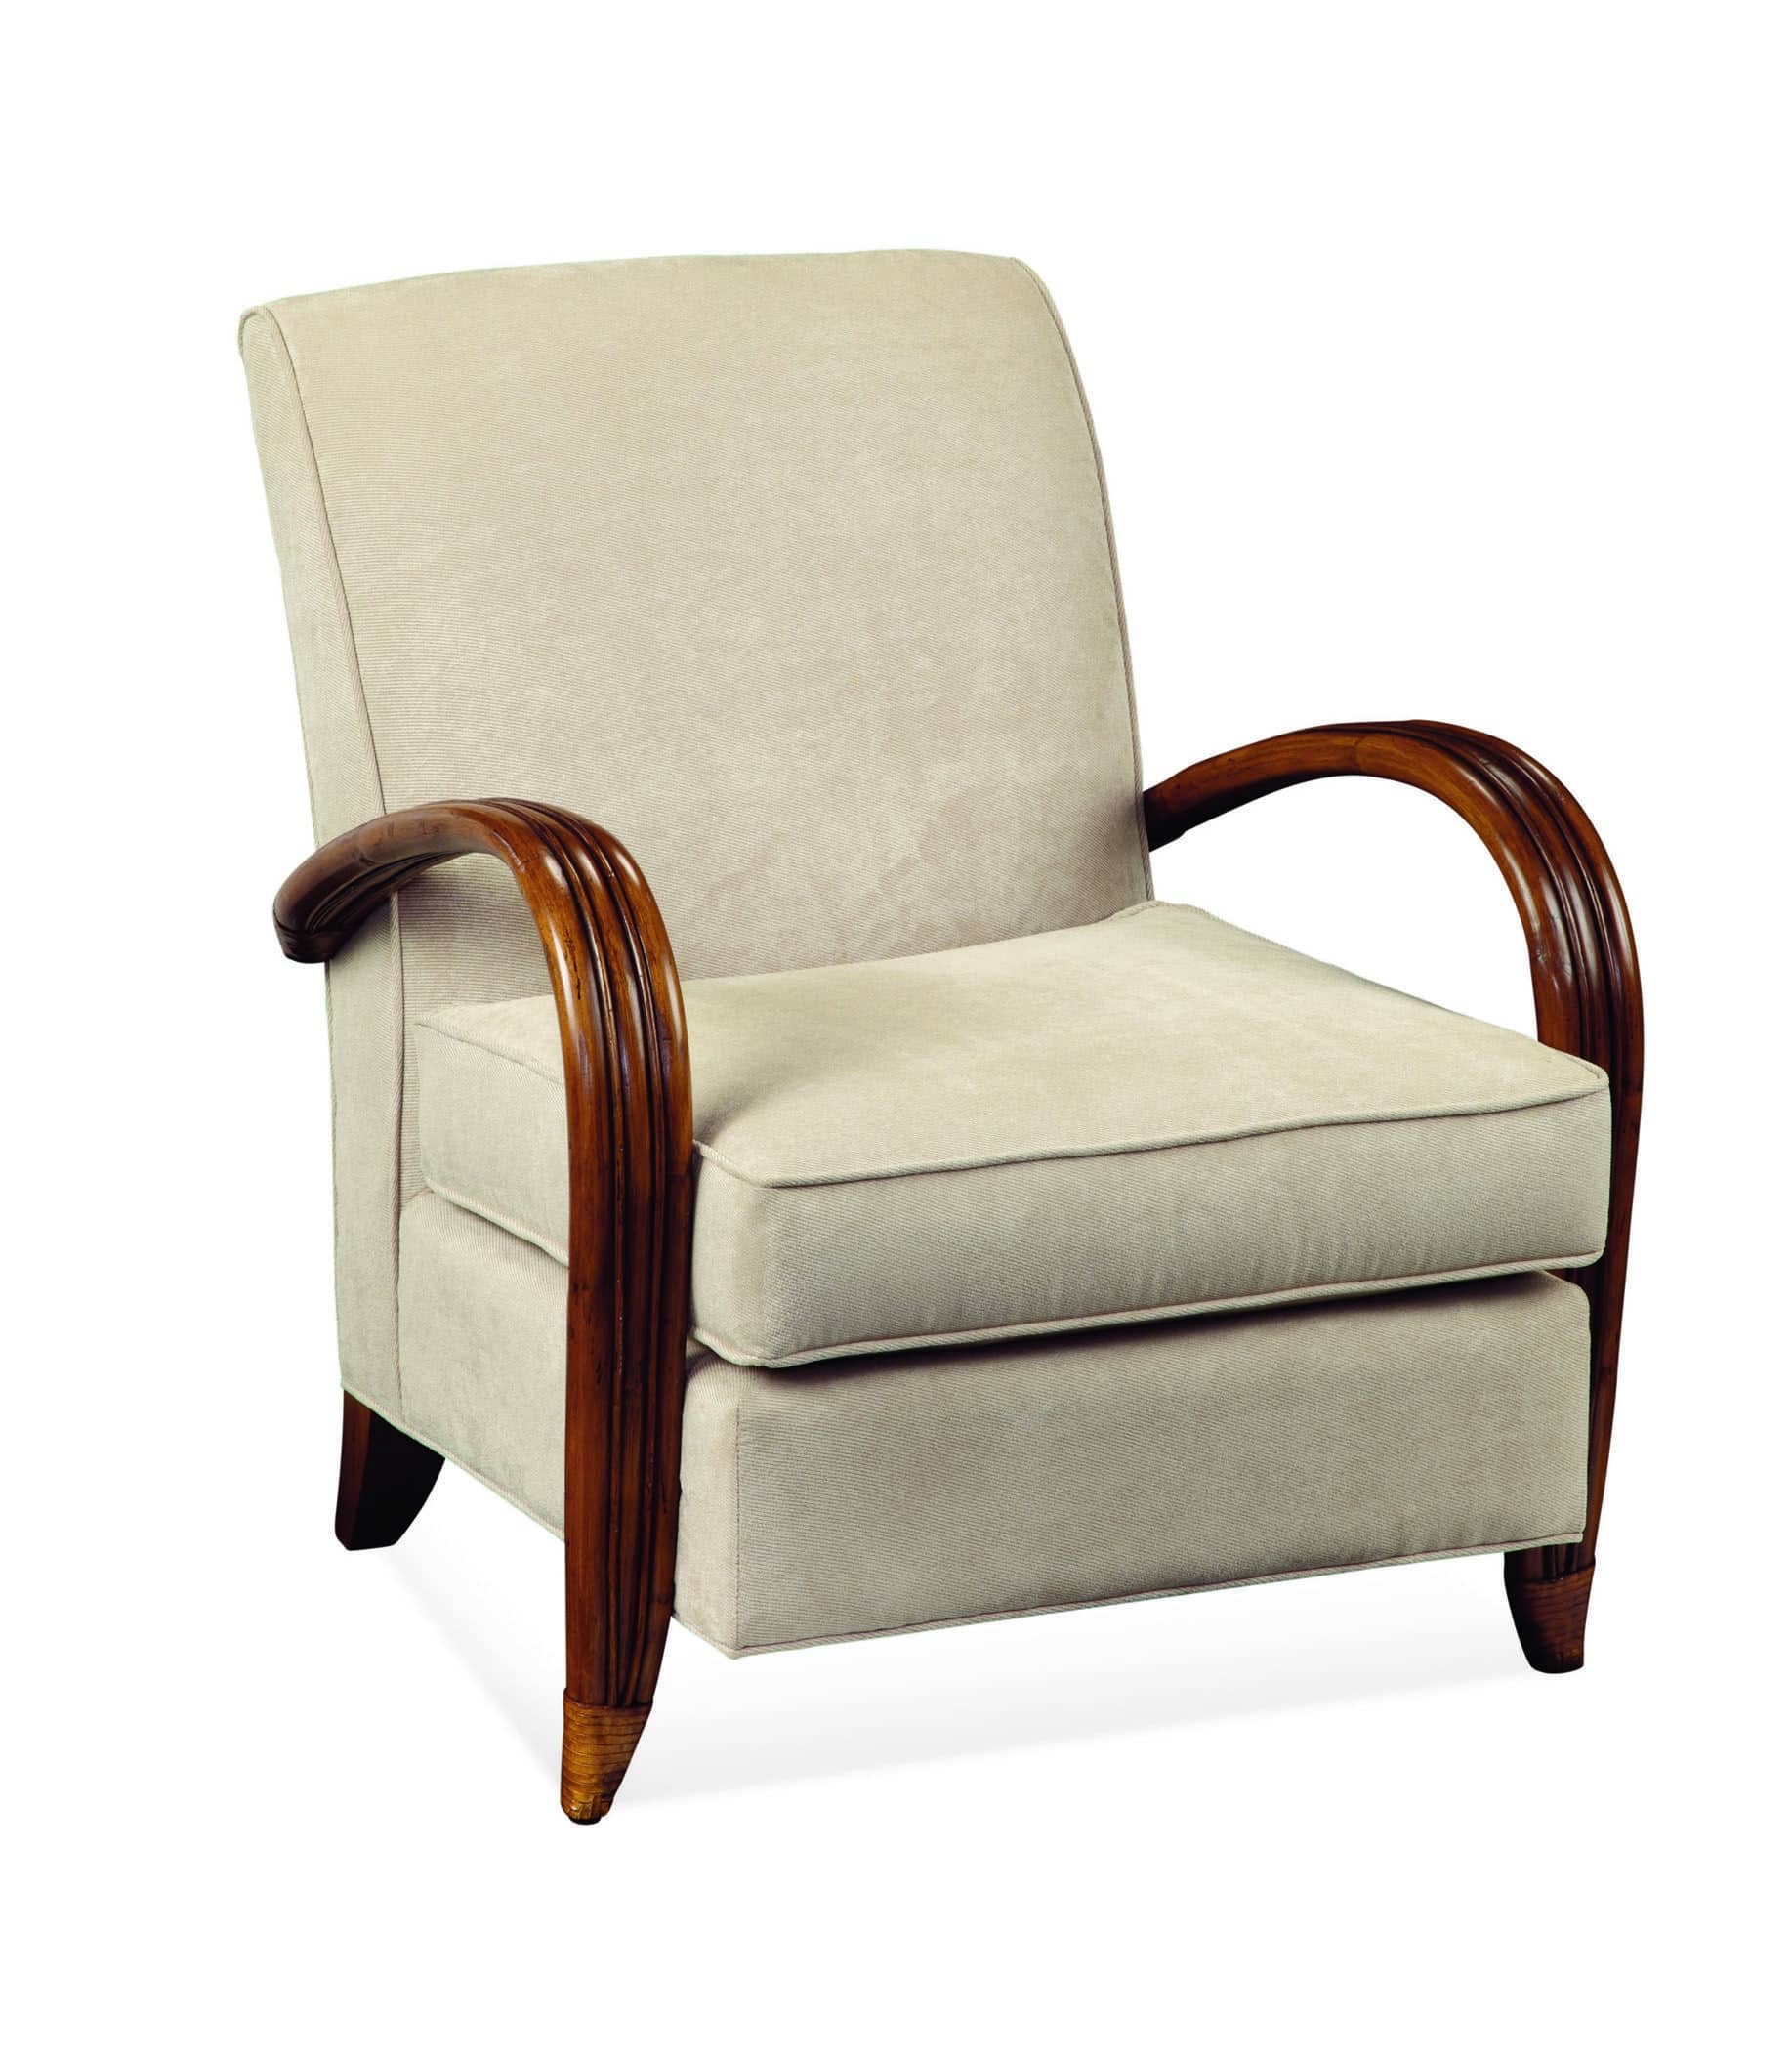 Vero Indoor Rattan Chair by Braxton Culler Model 1059-001